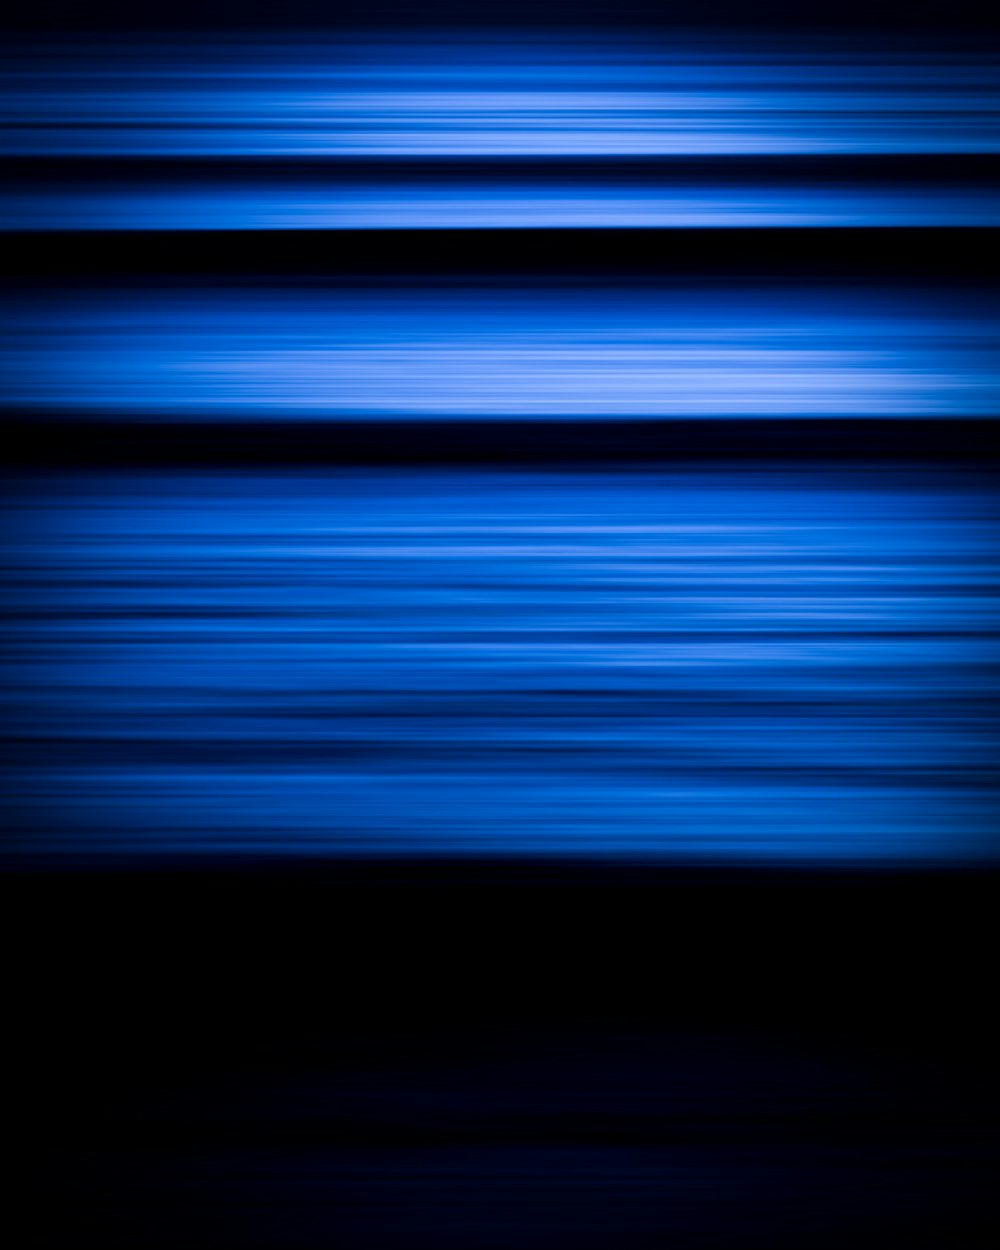 papel de parede digital de luz azul e branca